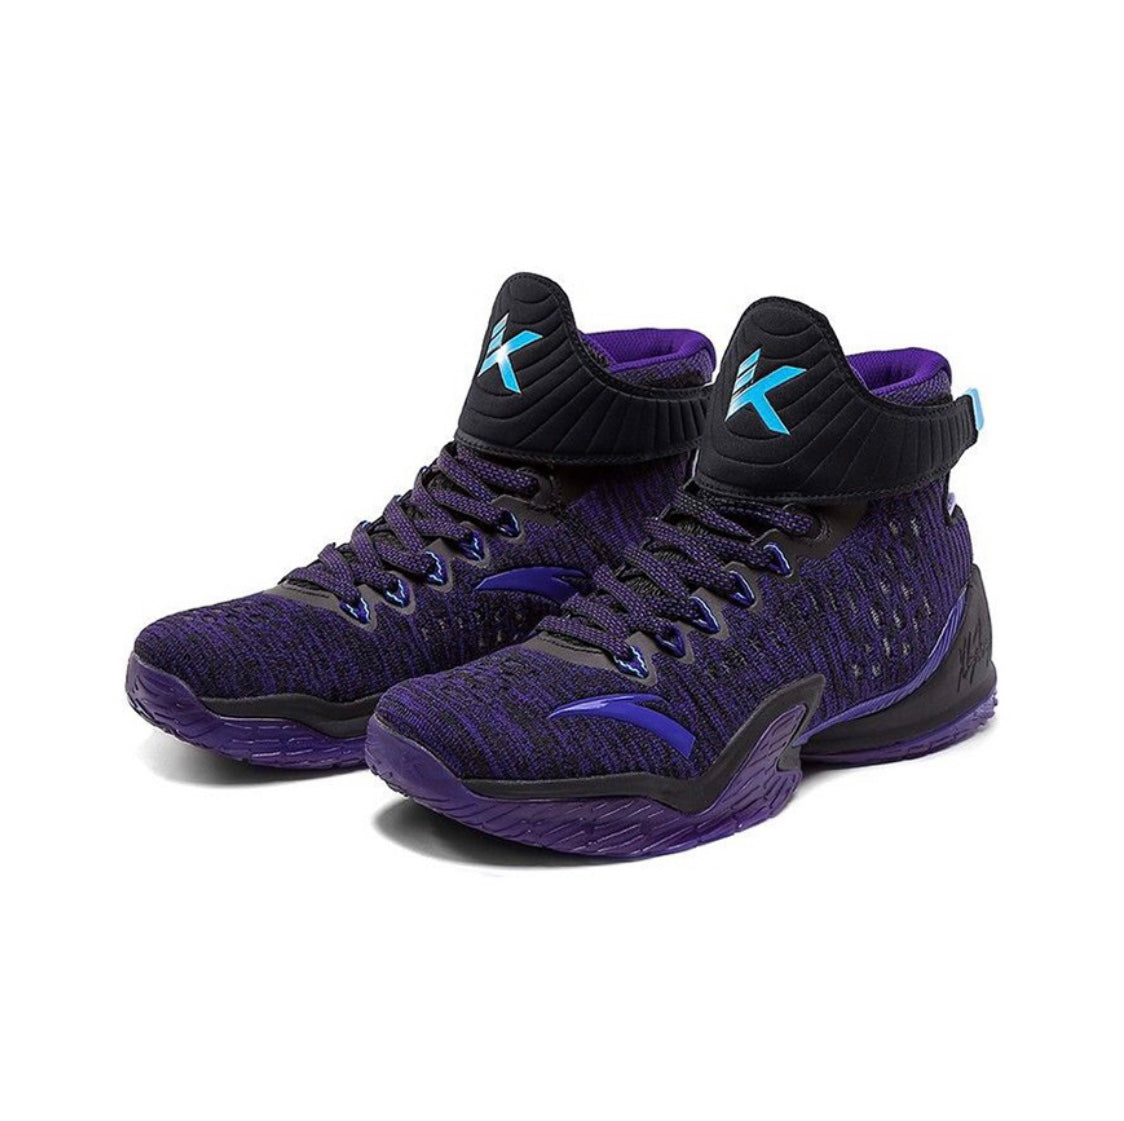 Anta Men's Klay Thompson Kt3 Black/Purple Basketball Shoes